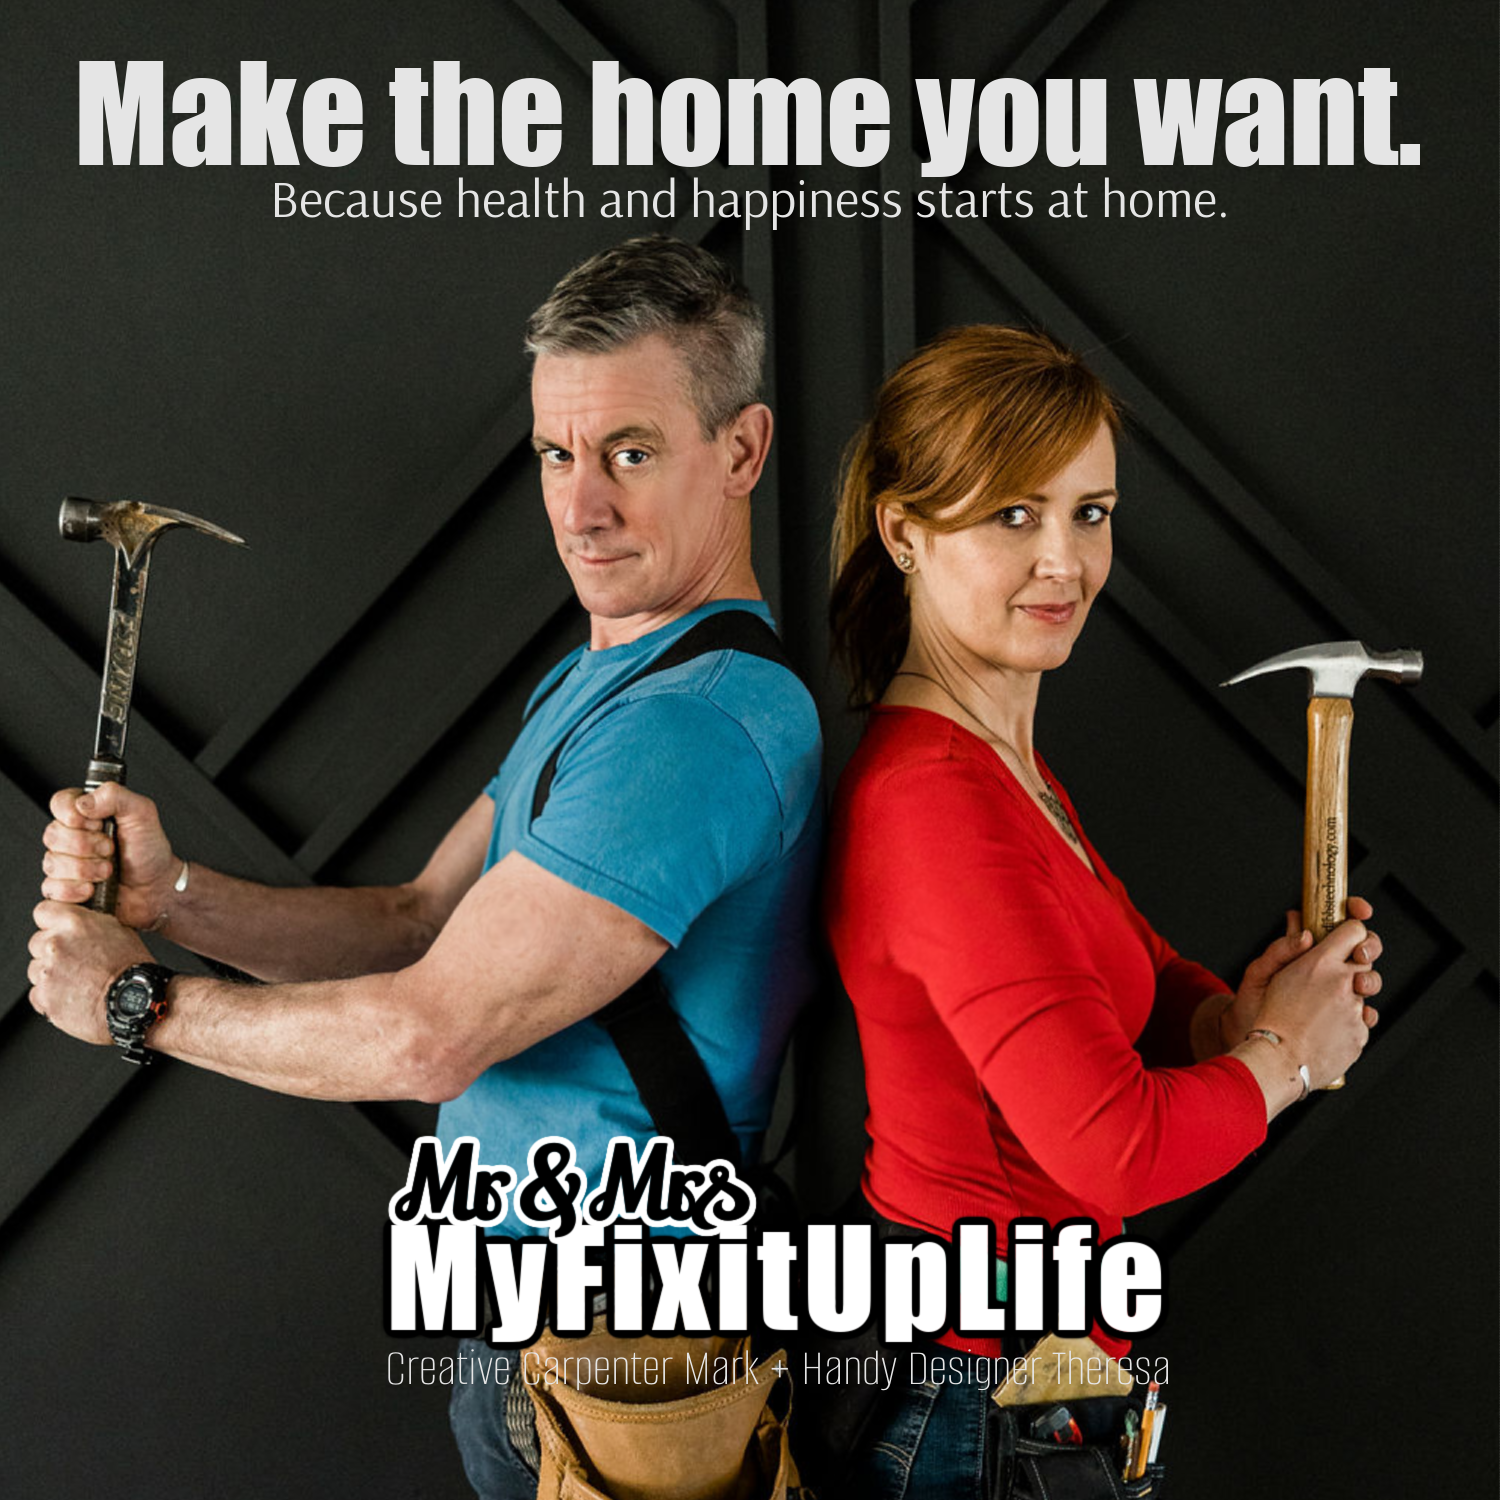 MyFixitUpLife Mark Theresa hammers